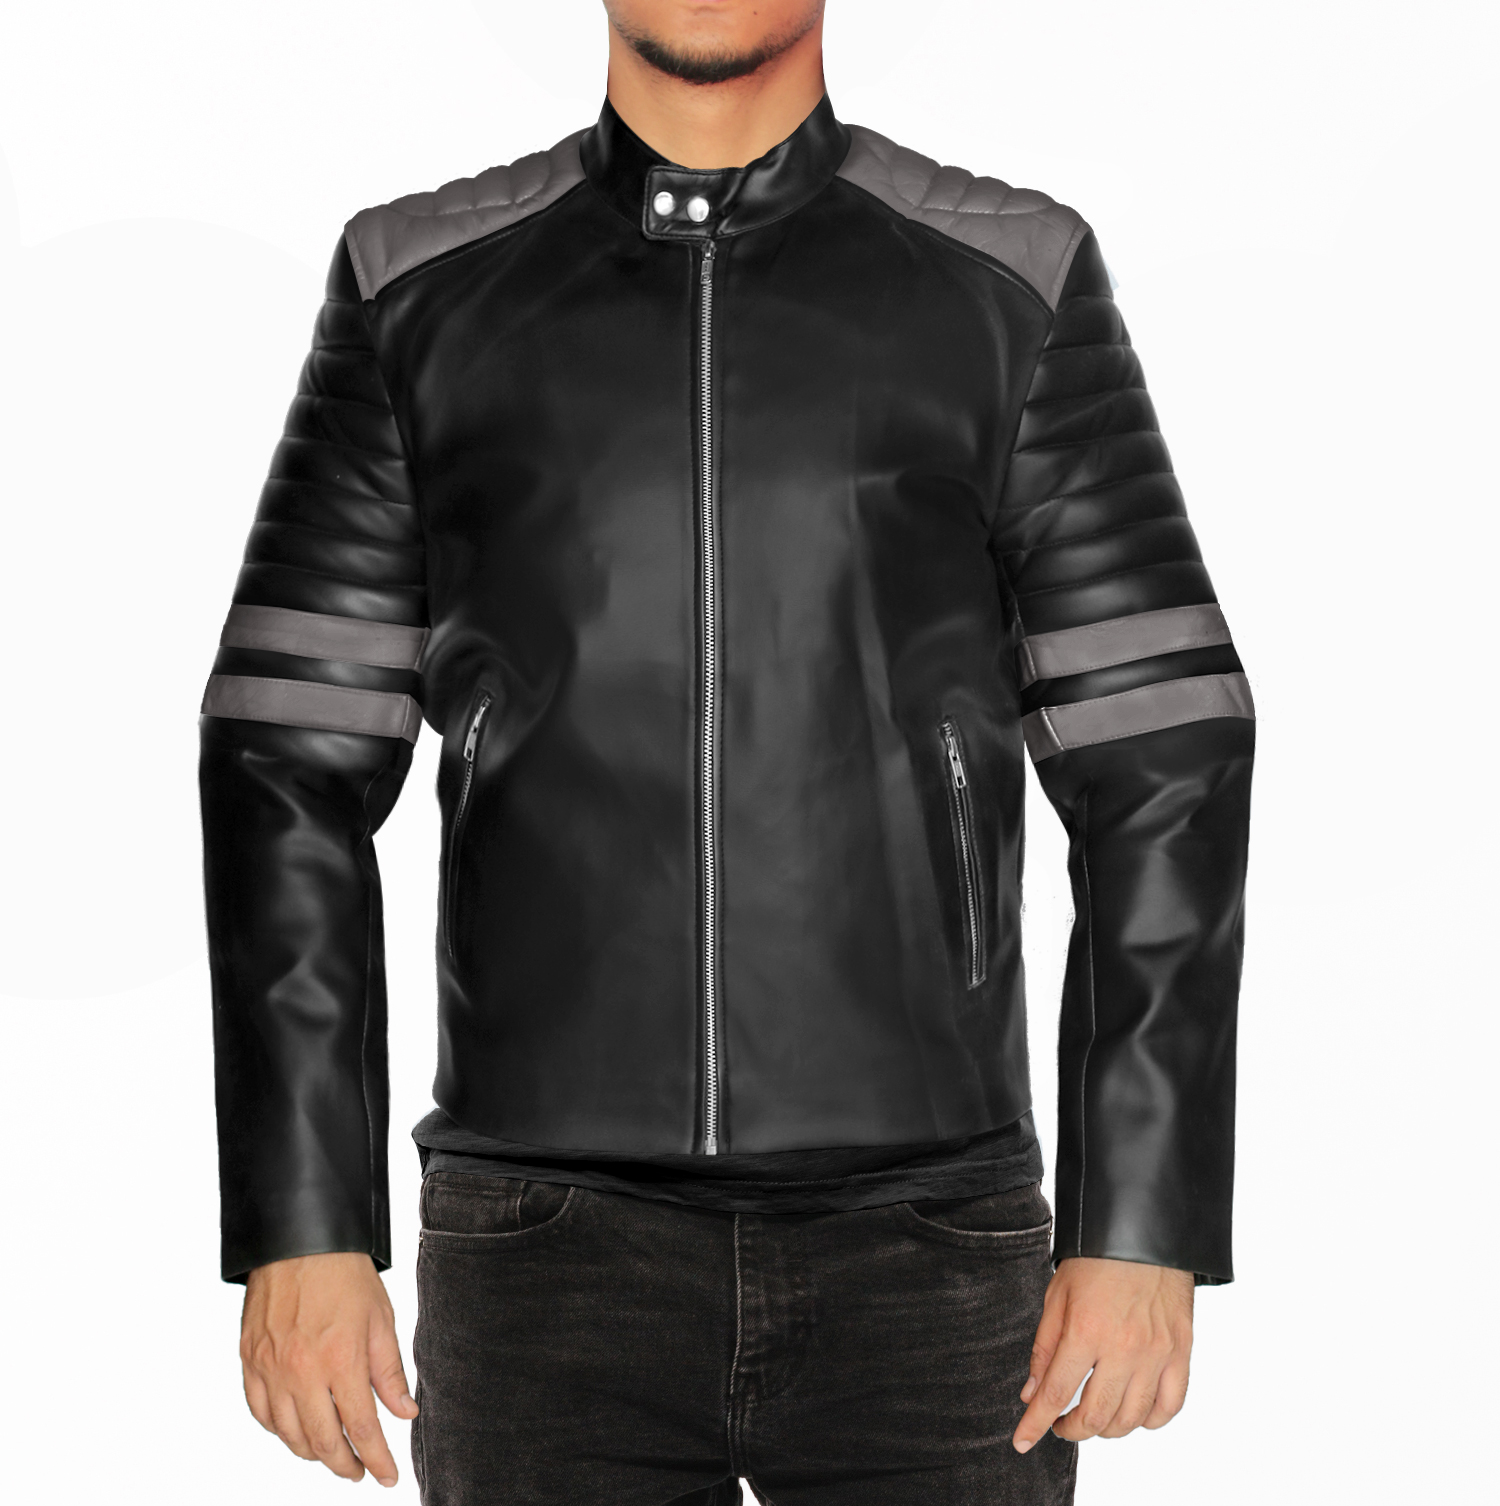 NomiLeather black leather jacket | mens leather jacket and genuine leather jacket men (Black With Grey Strip ) Medium - image 1 of 7